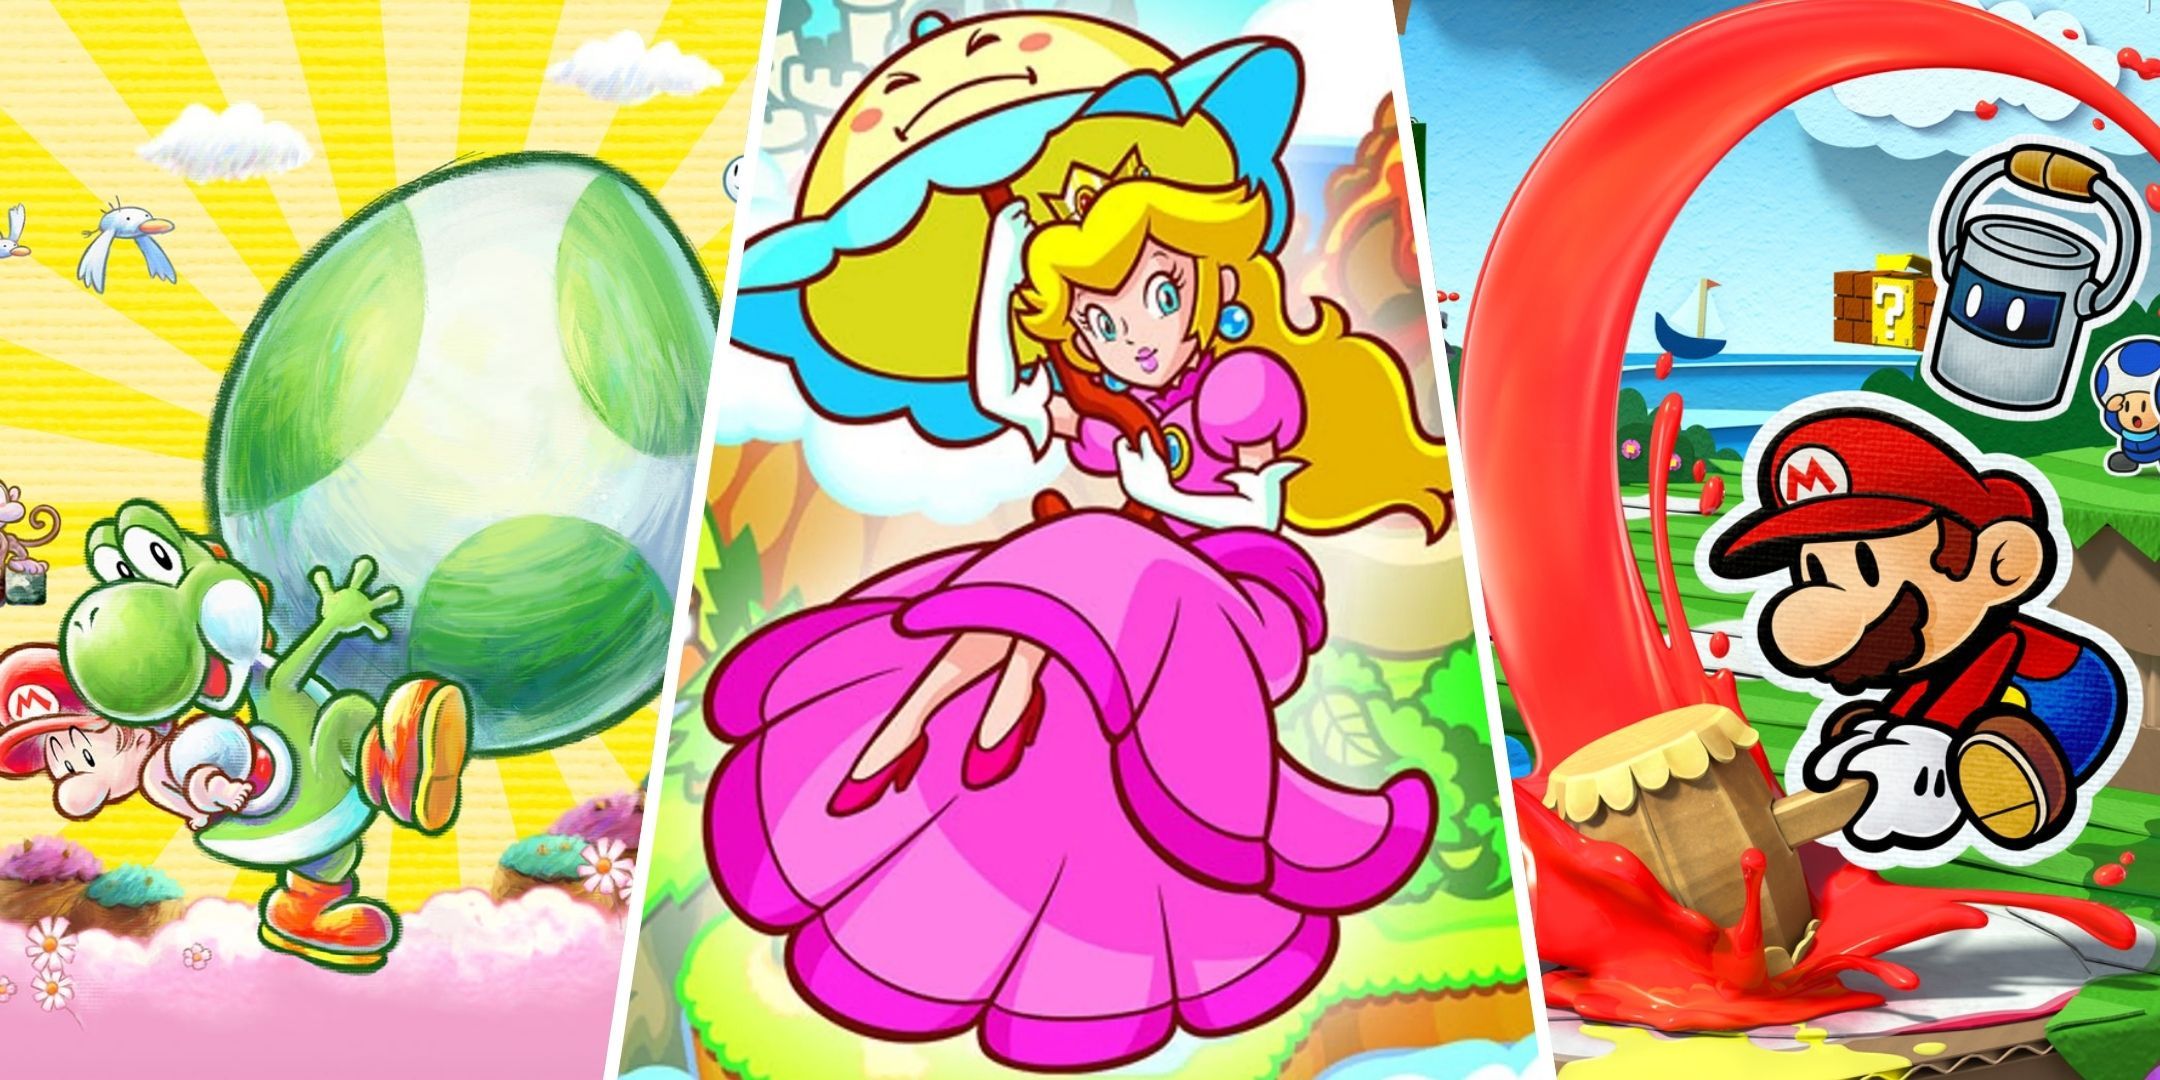 Split image of artwork from Yoshi's New Island Super Princess Peach and Paper Mario Color Splash